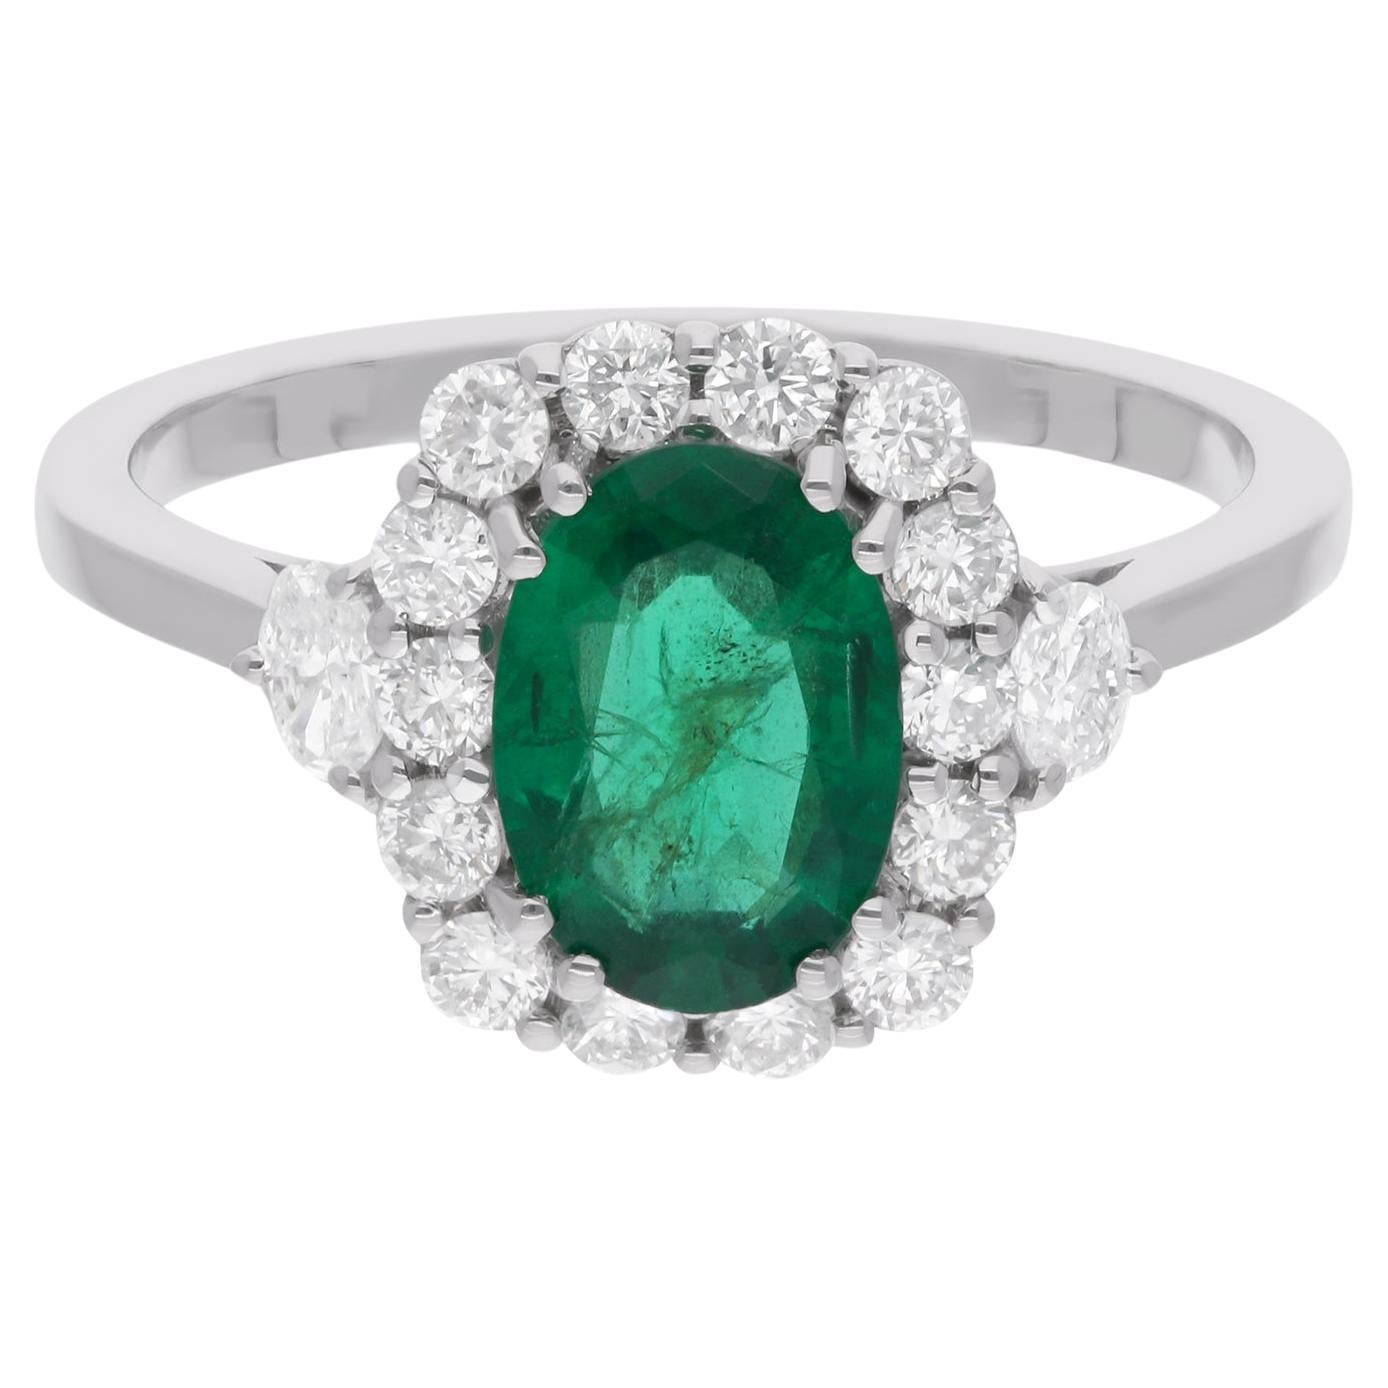 Oval Zambian Emerald Cocktail Ring Diamond 18 Karat White Gold Handmade Jewelry For Sale